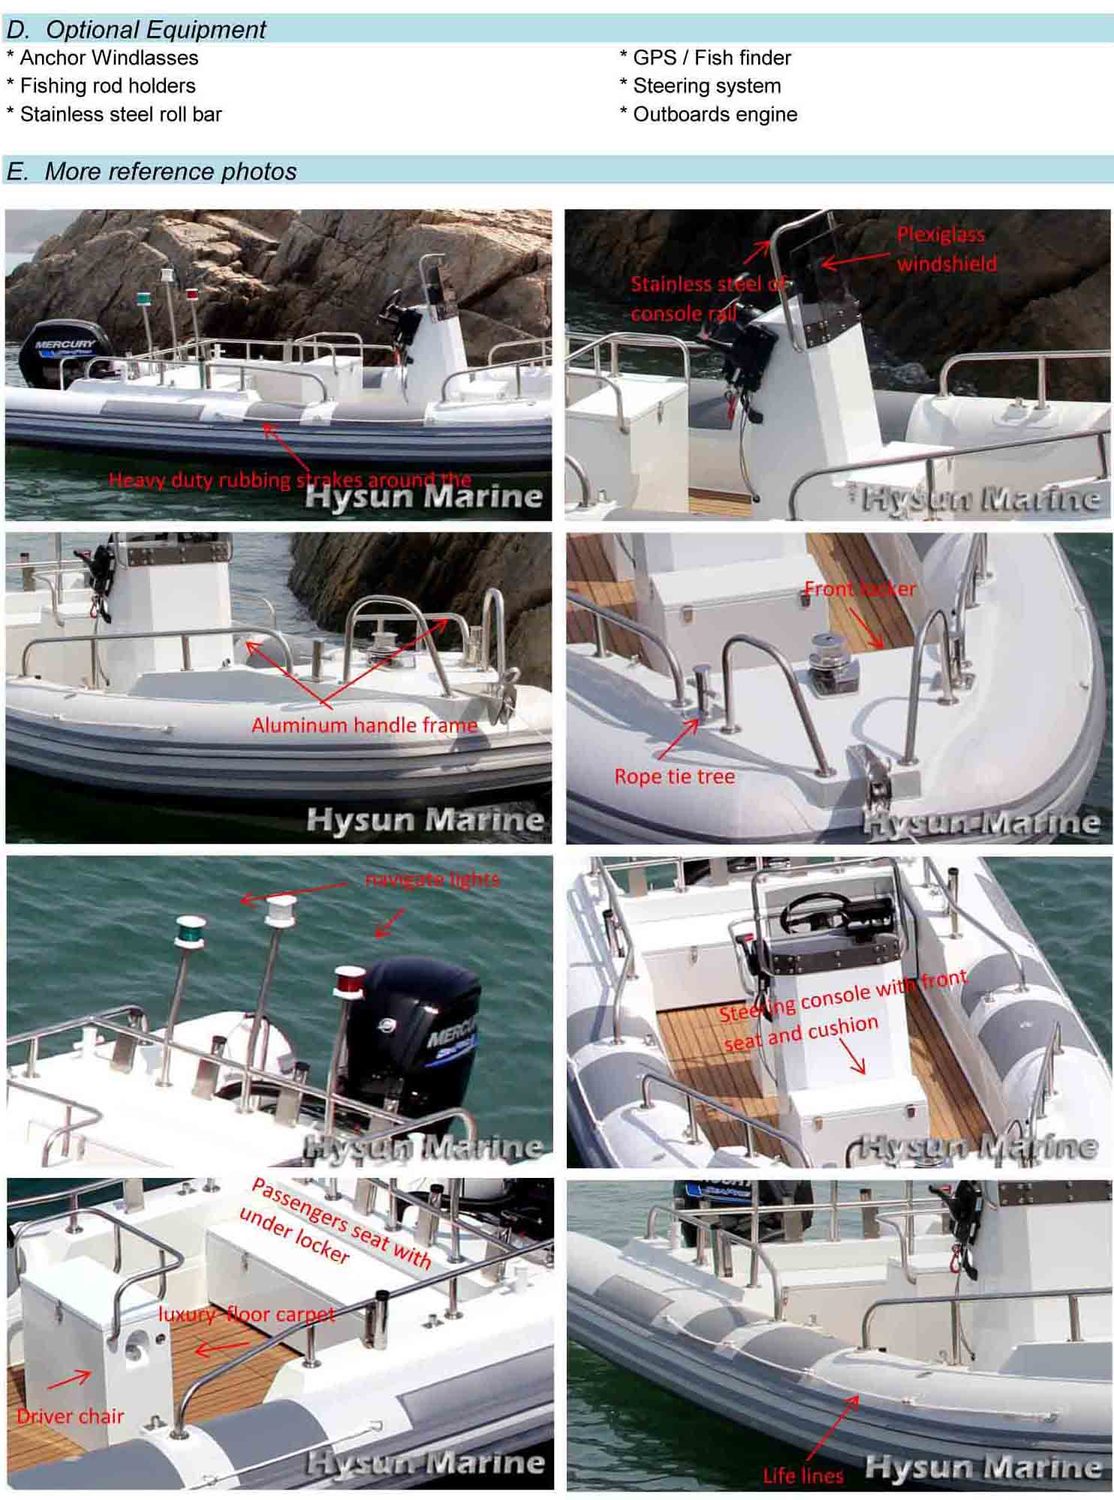 Hysun Marine AR Series Aluminum-hull Inflatable Boats